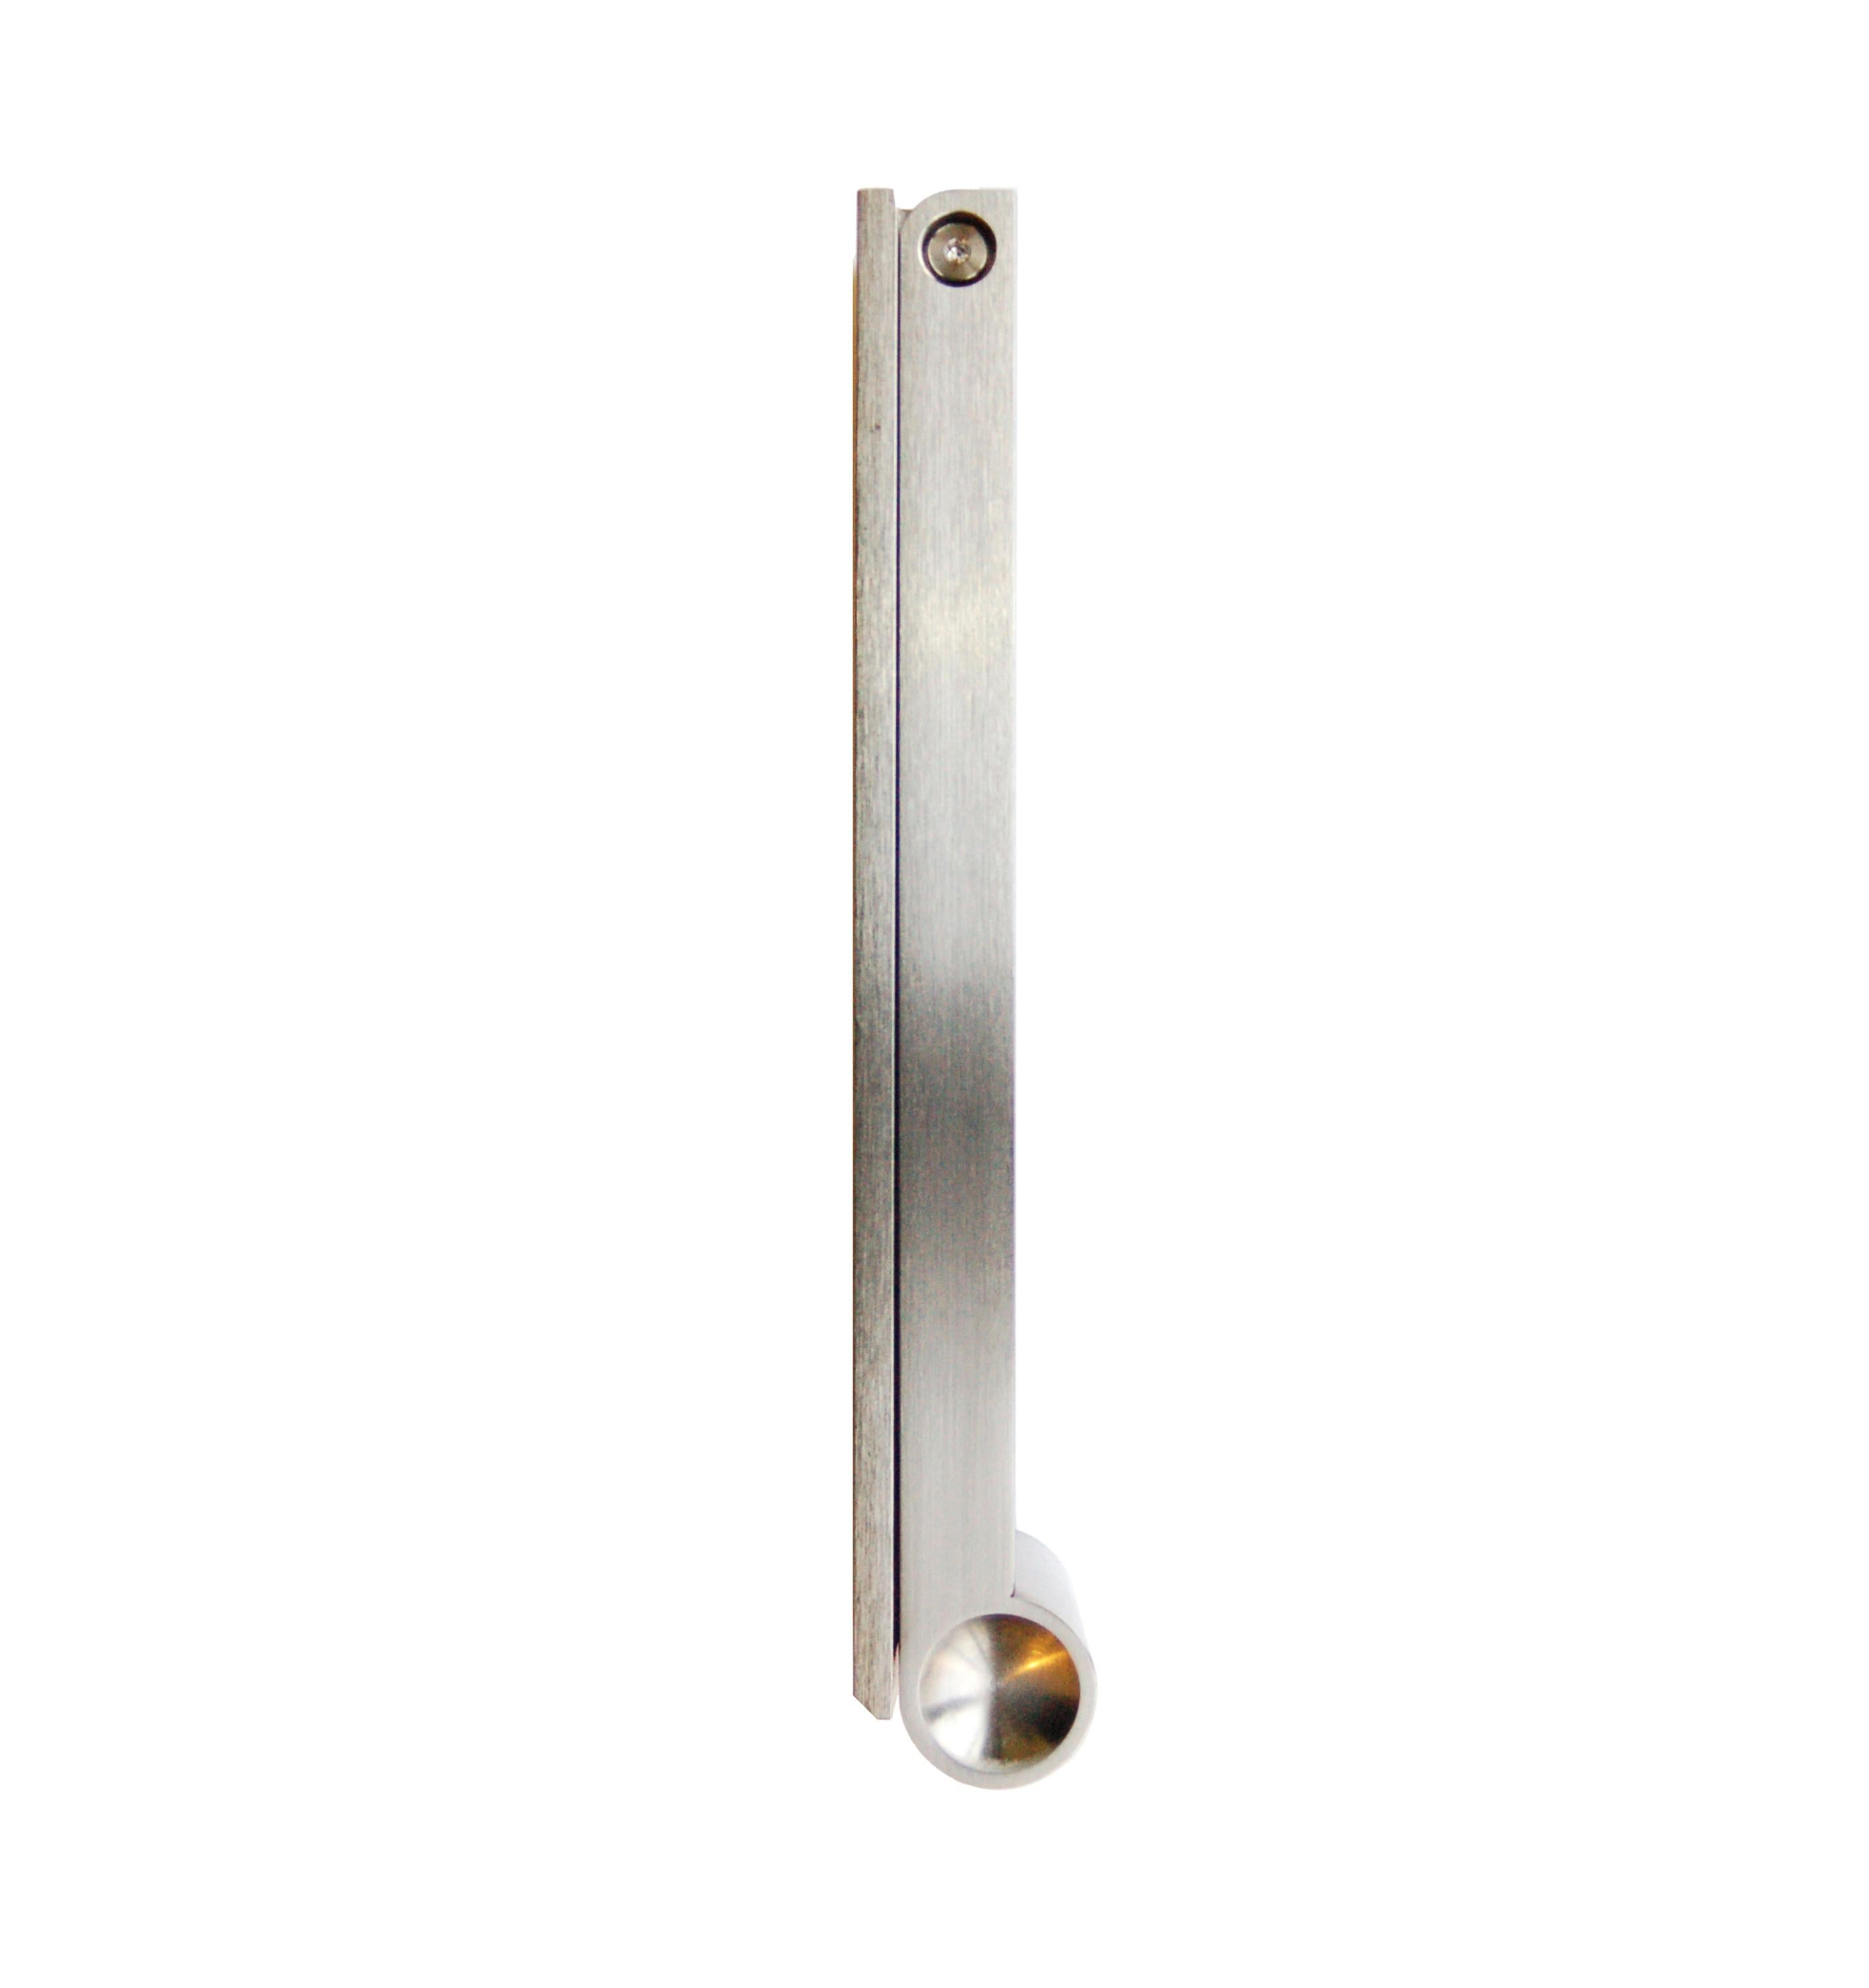 American Pendulum Door Knocker in Stainless Steel For Sale